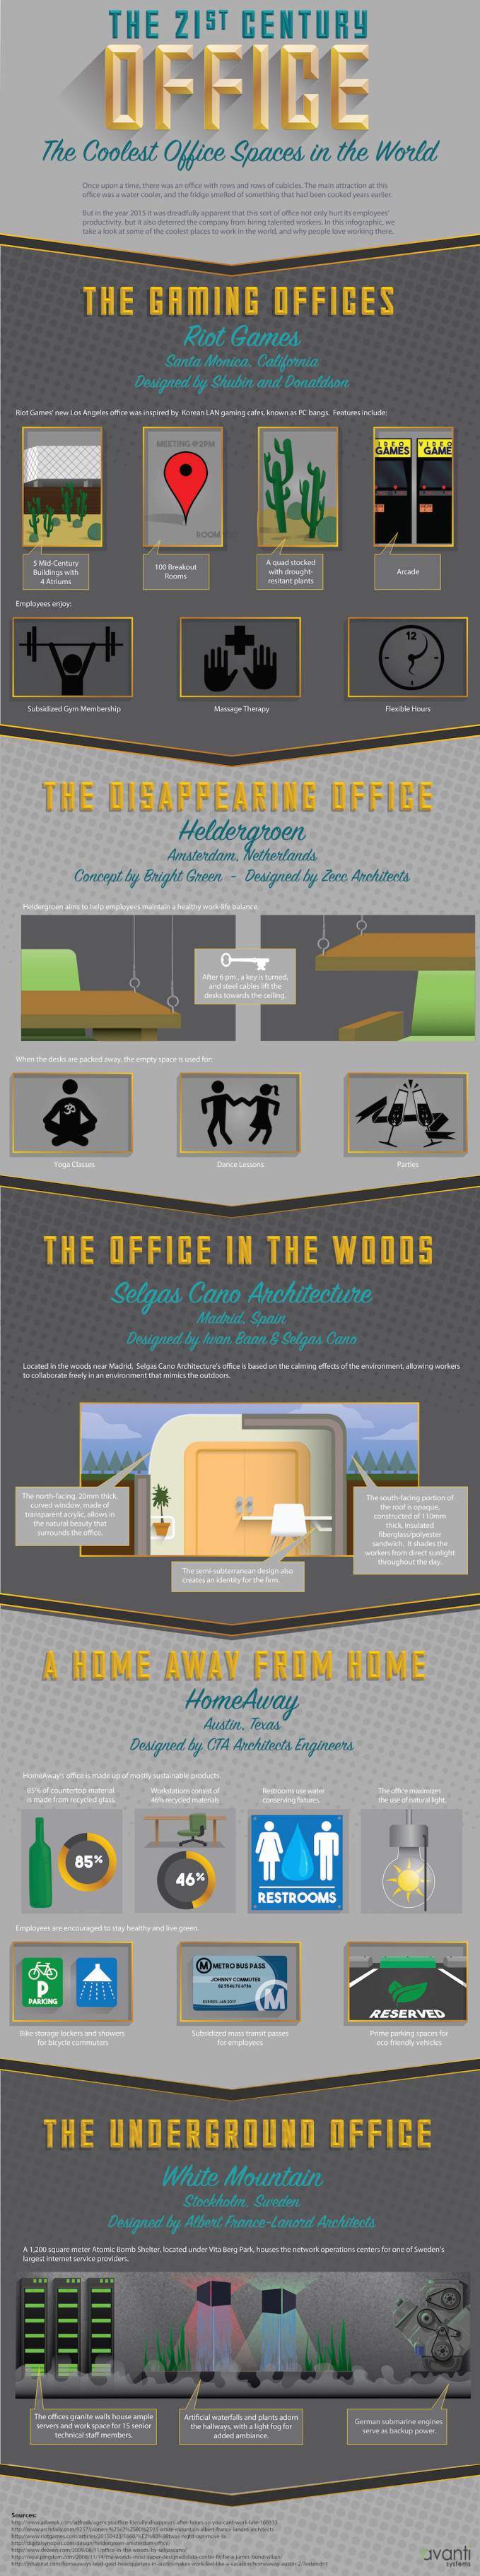 Infographic: 21st century office